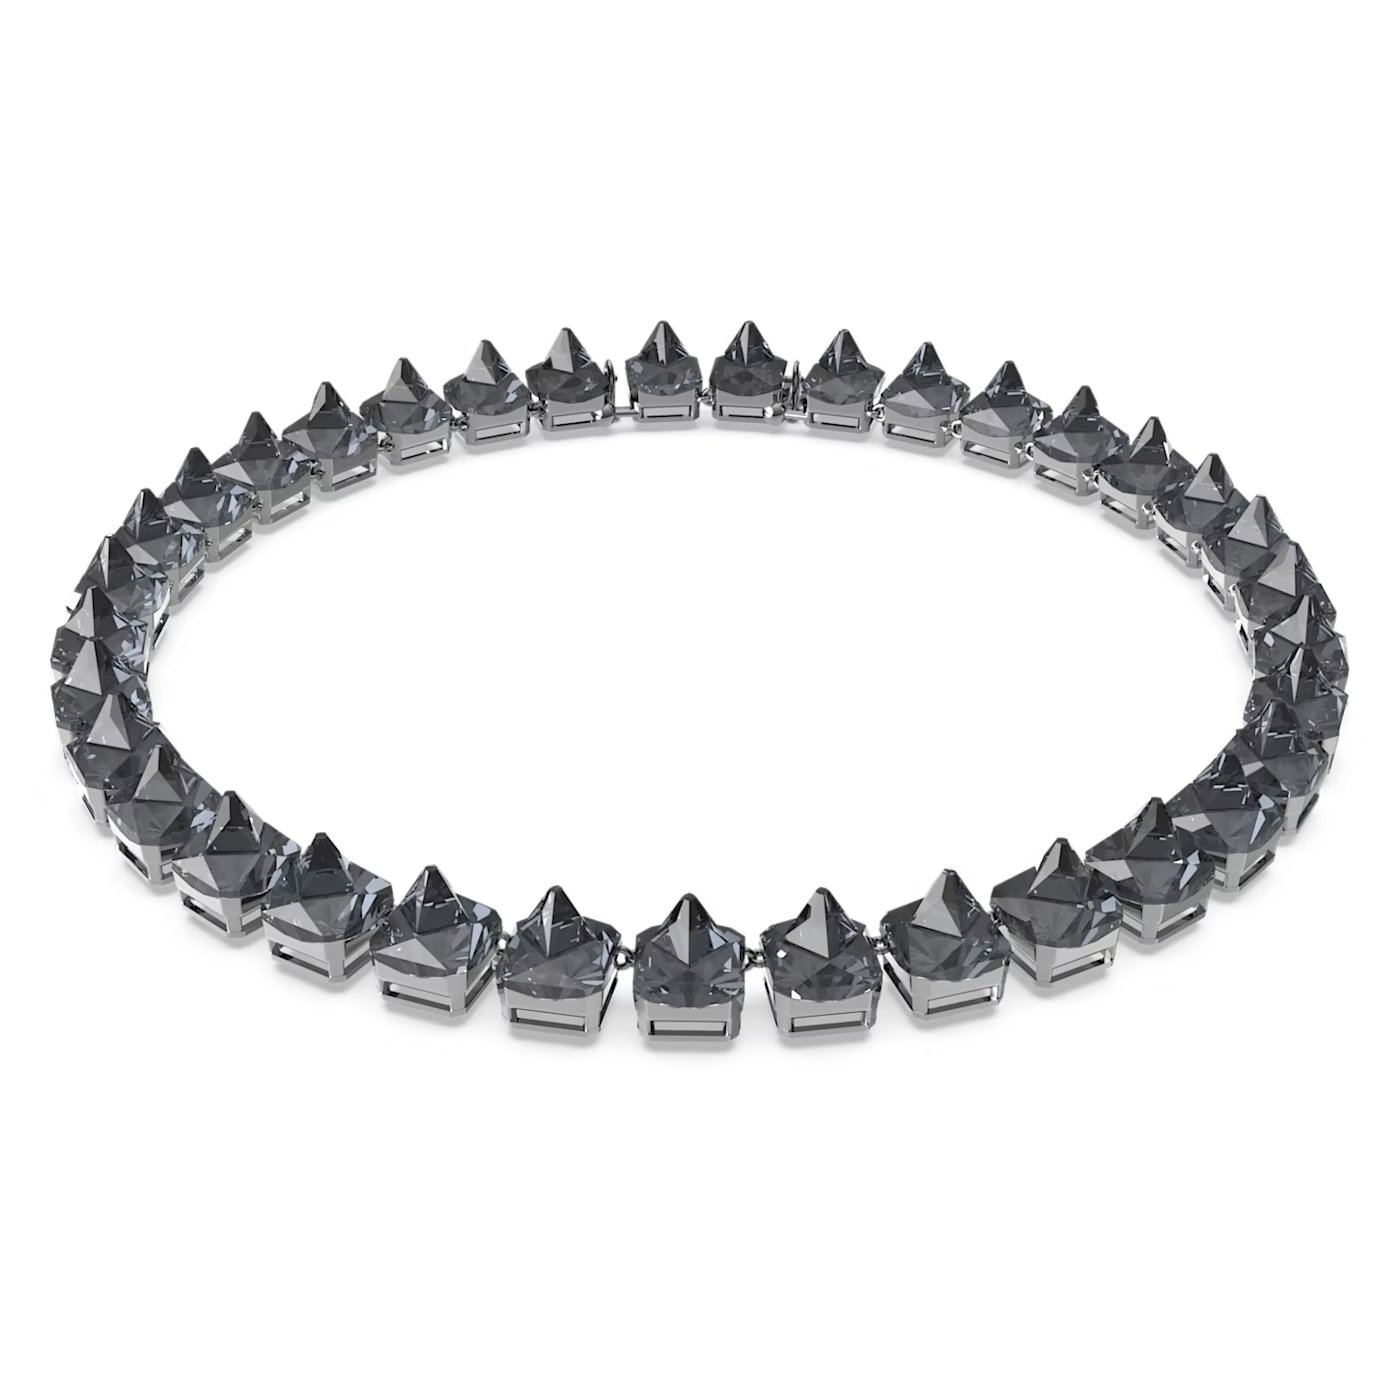 62f568889d910_px-ortyx-necklace--pyramid-cut--gray--ruthenium-plated-swarovski-5613682.jpg